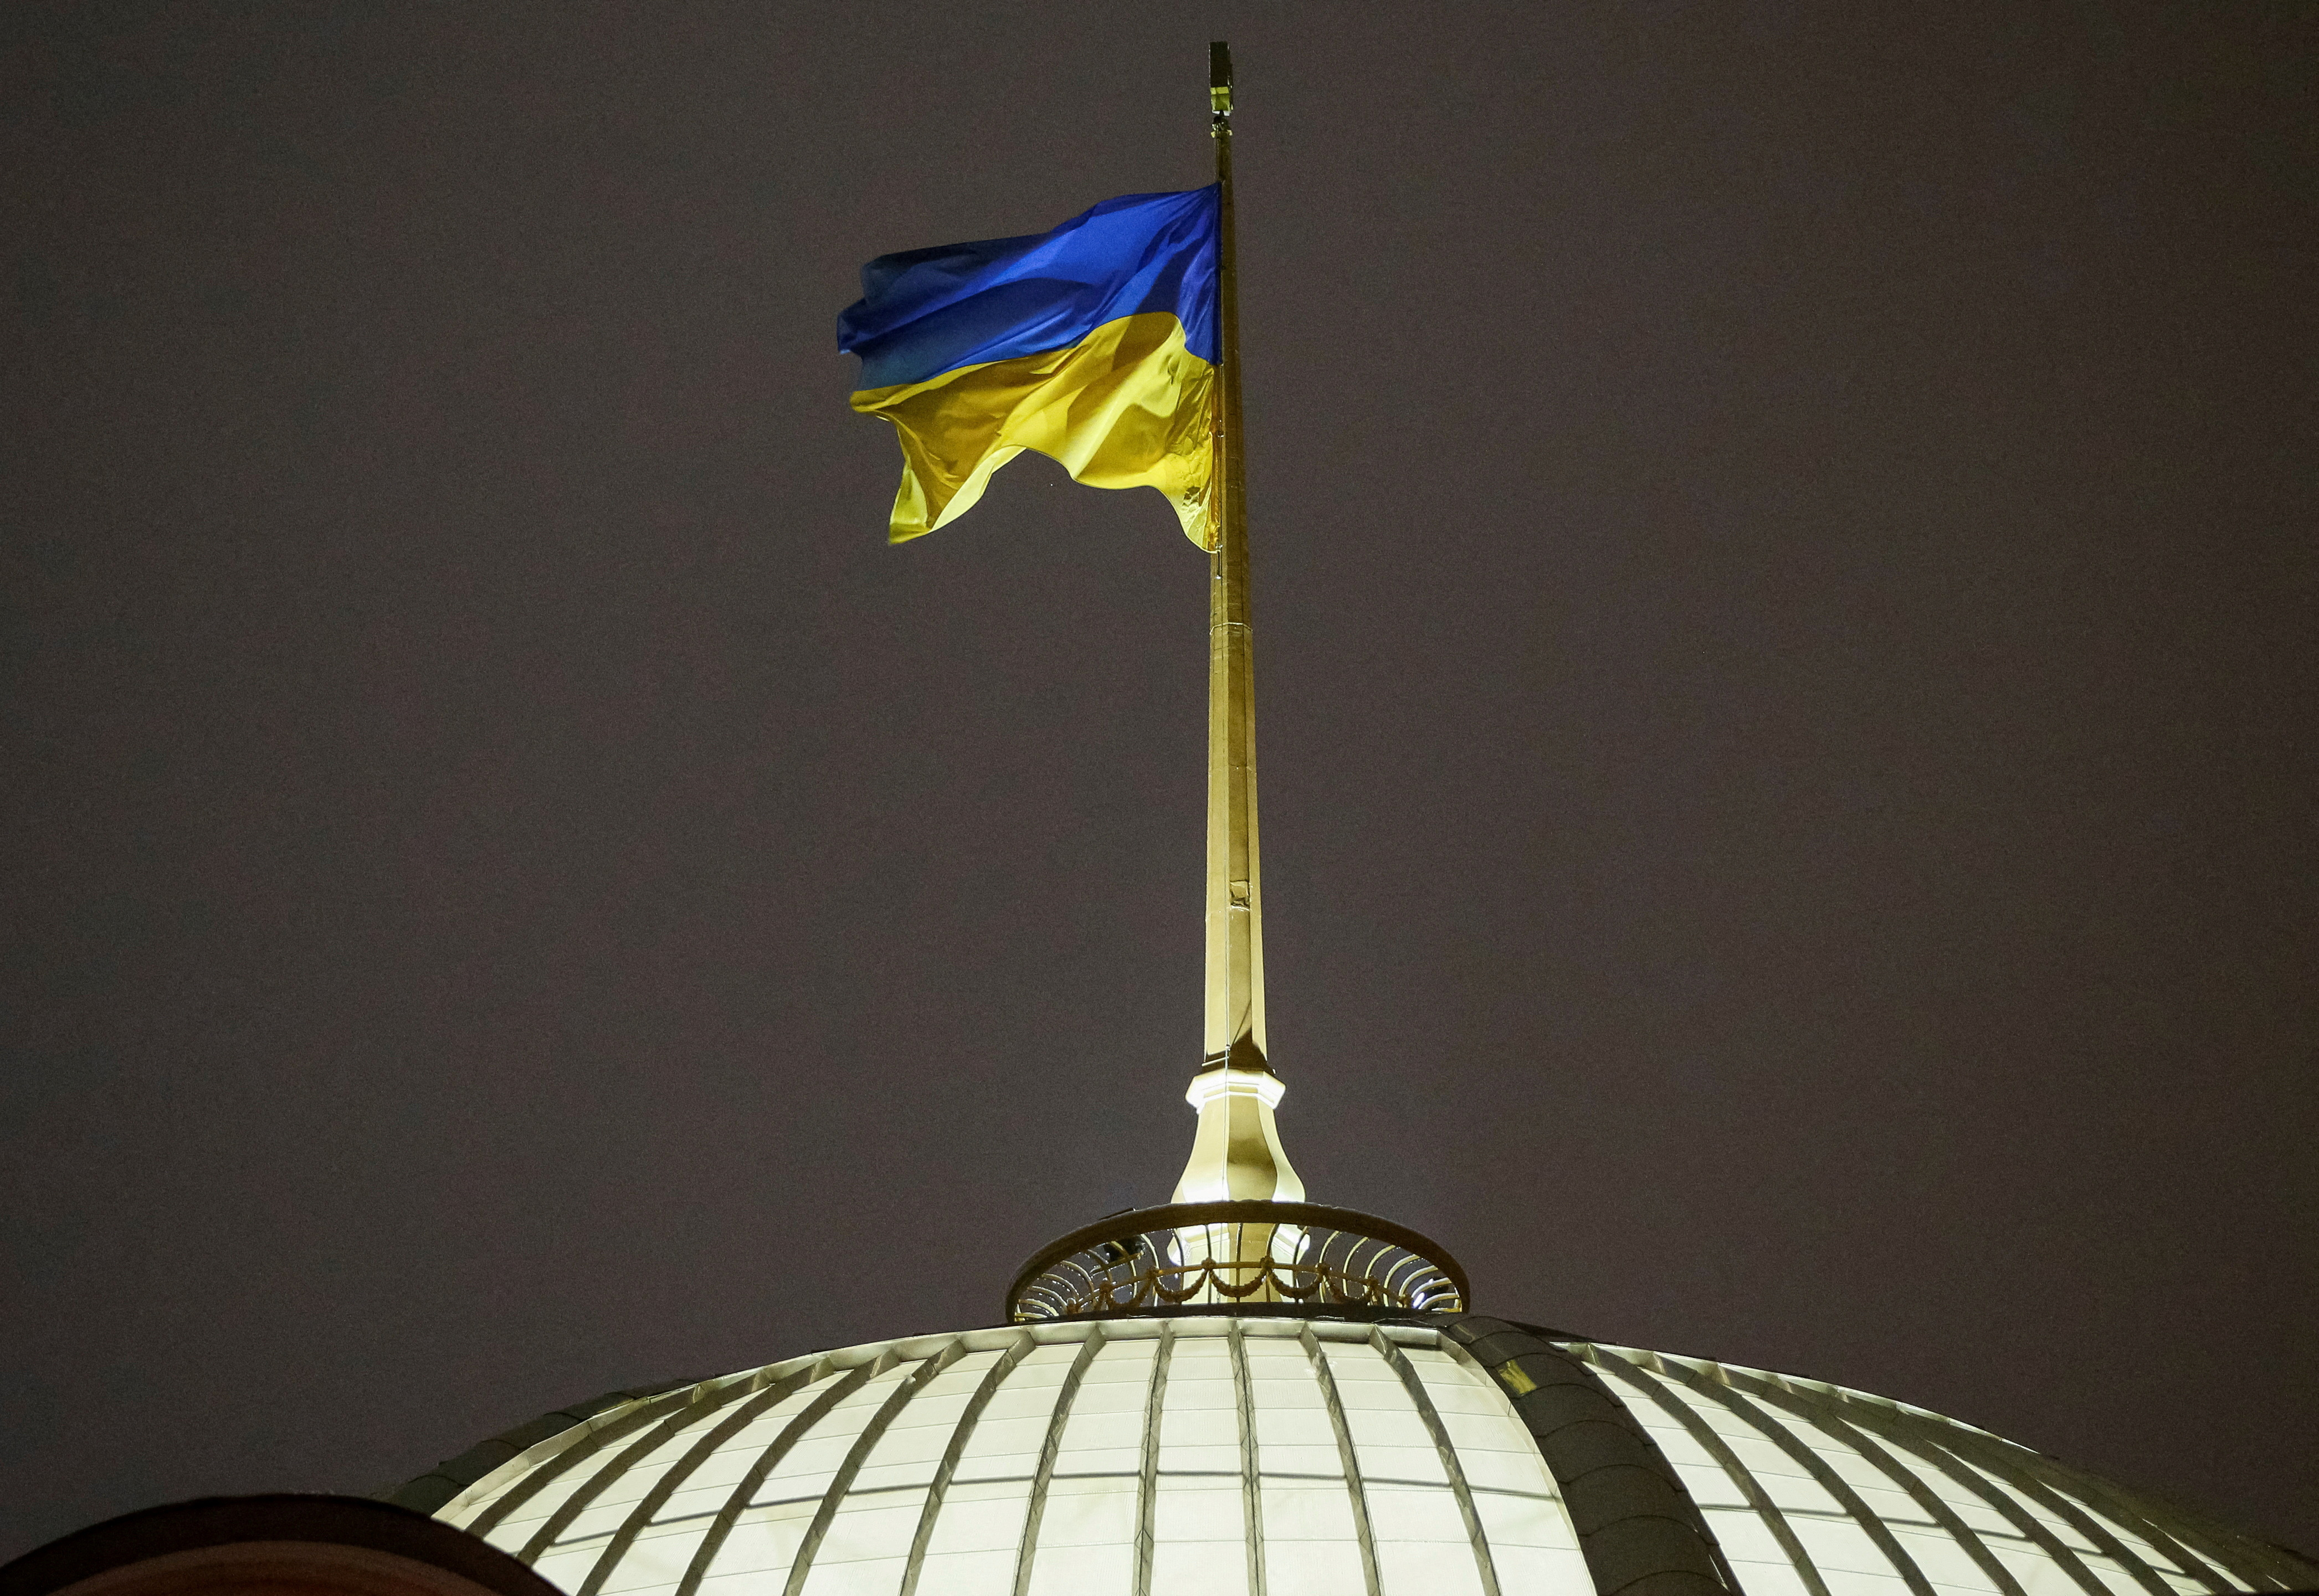 A Ukrainian national flag flies over the parliament building in Kyiv